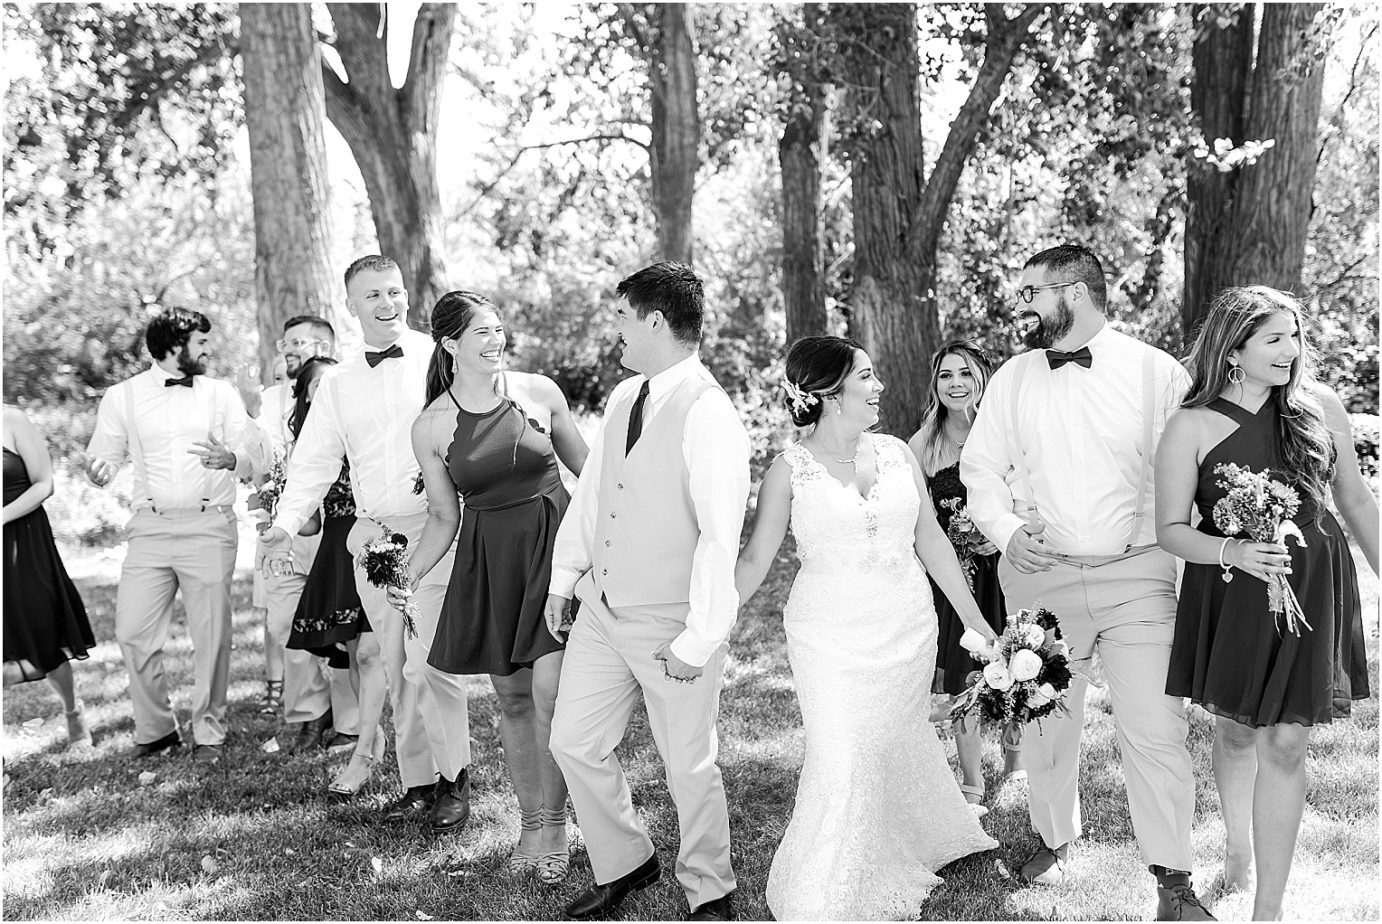 Shadow Lake Ranch Wedding Prosser WA Jeff and Rocio wedding party